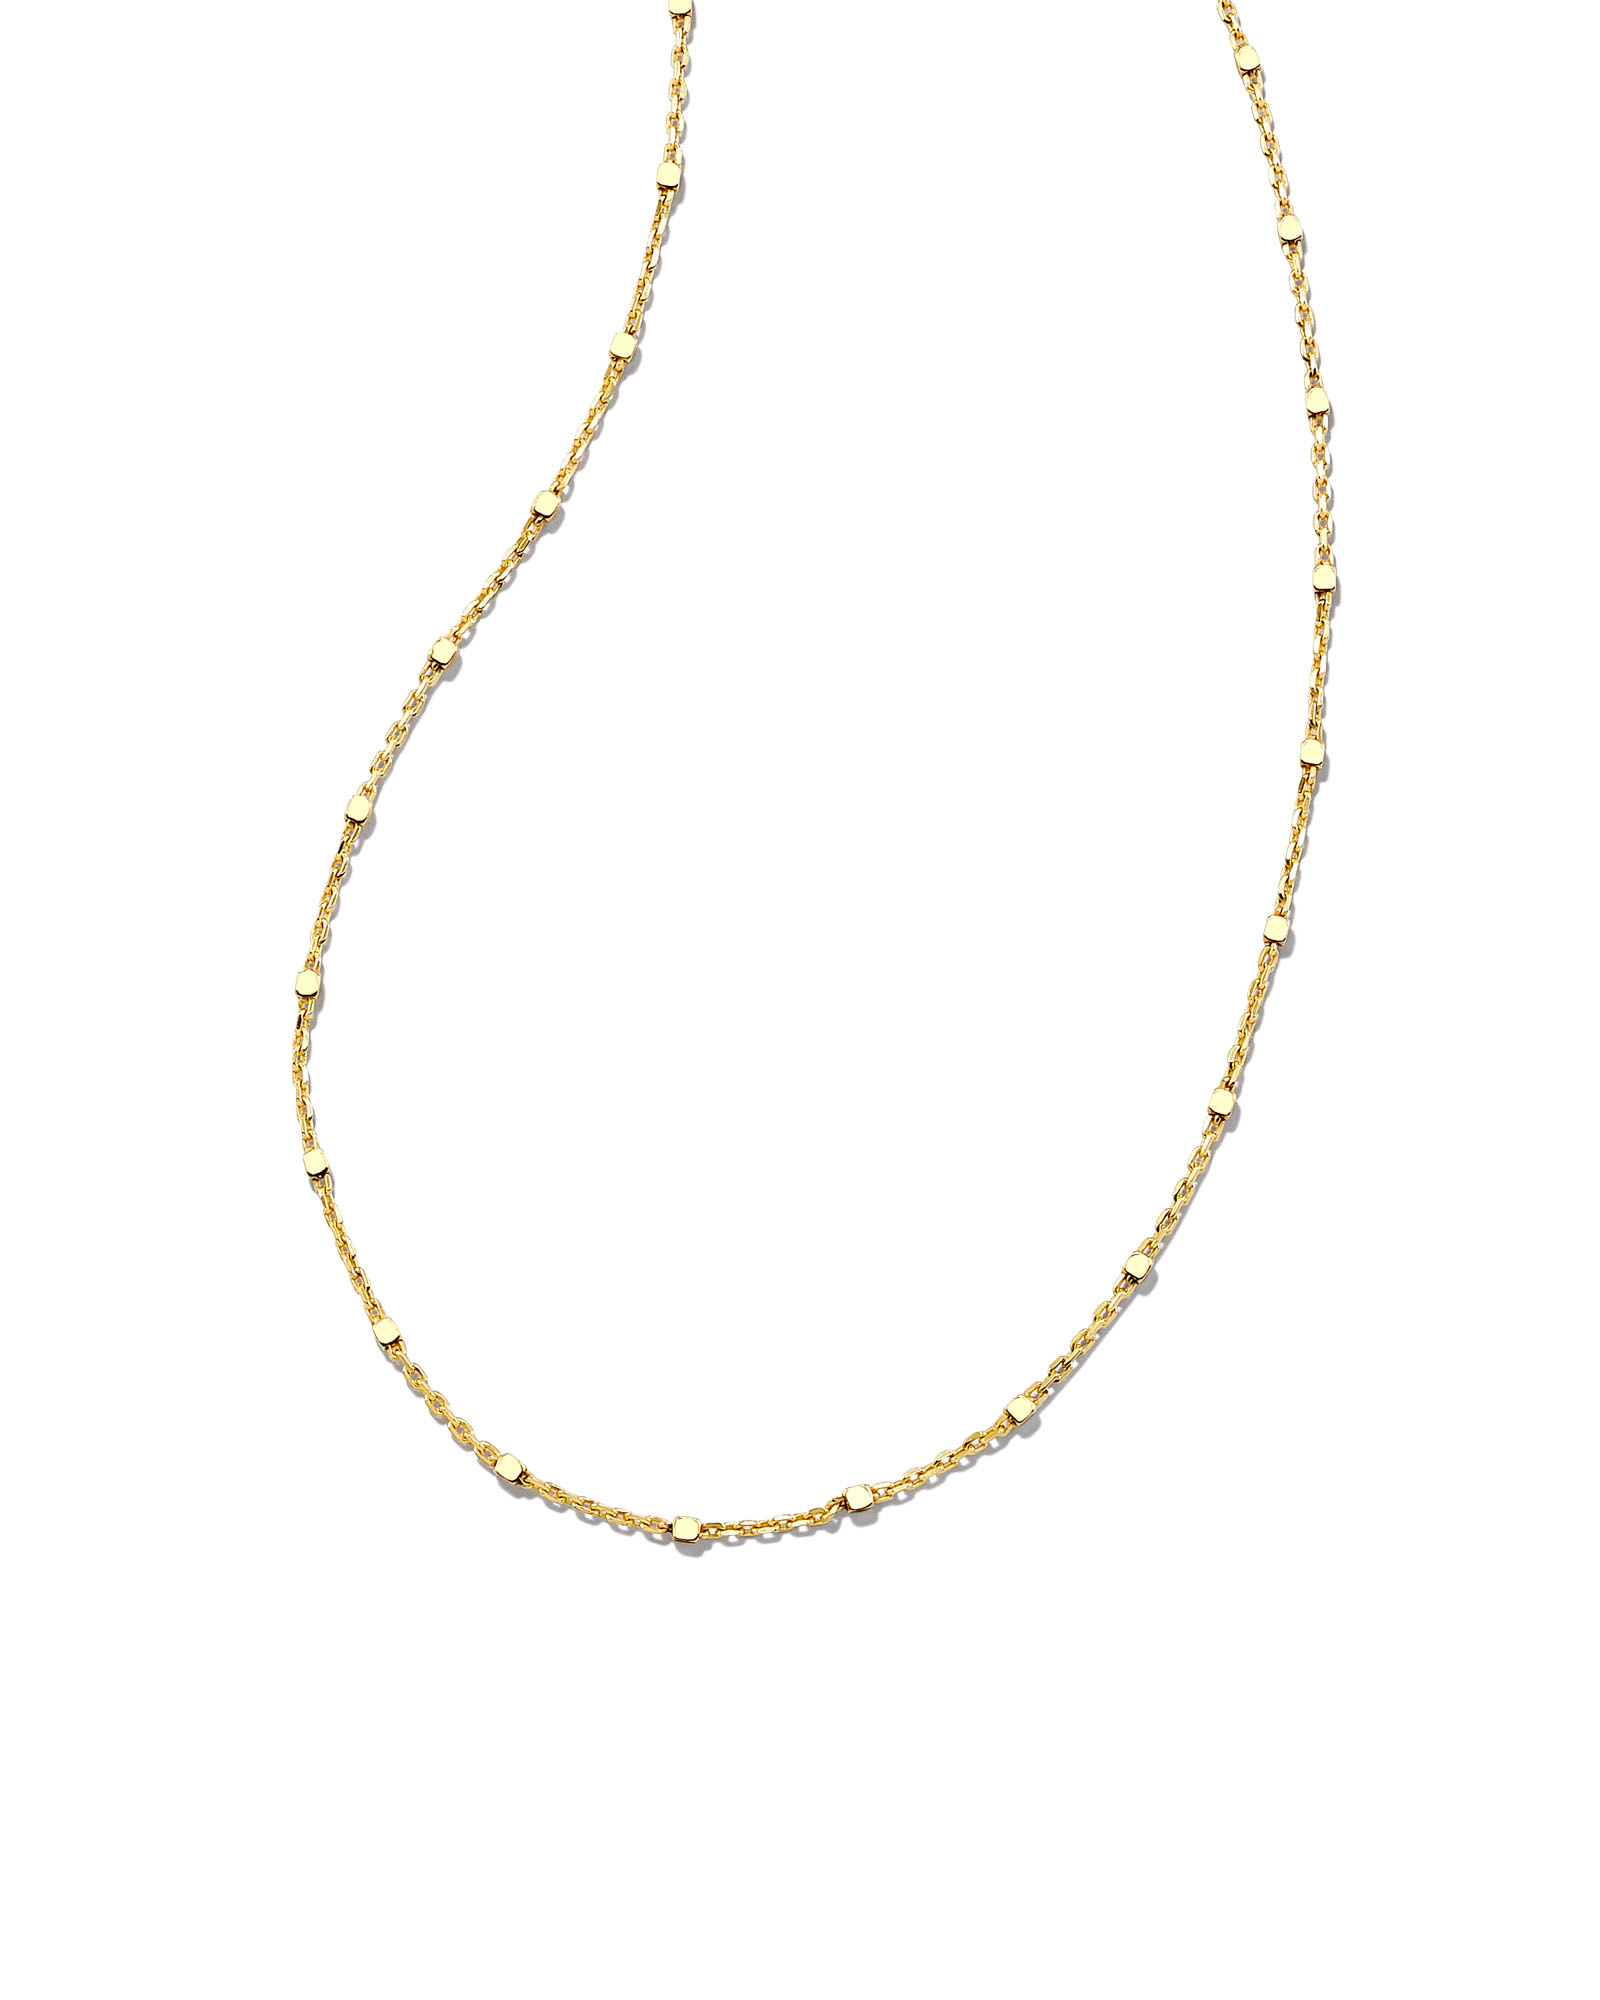 Elisa Multi Strand Necklace in 18k Yellow Gold Vermeil | Kendra Scott